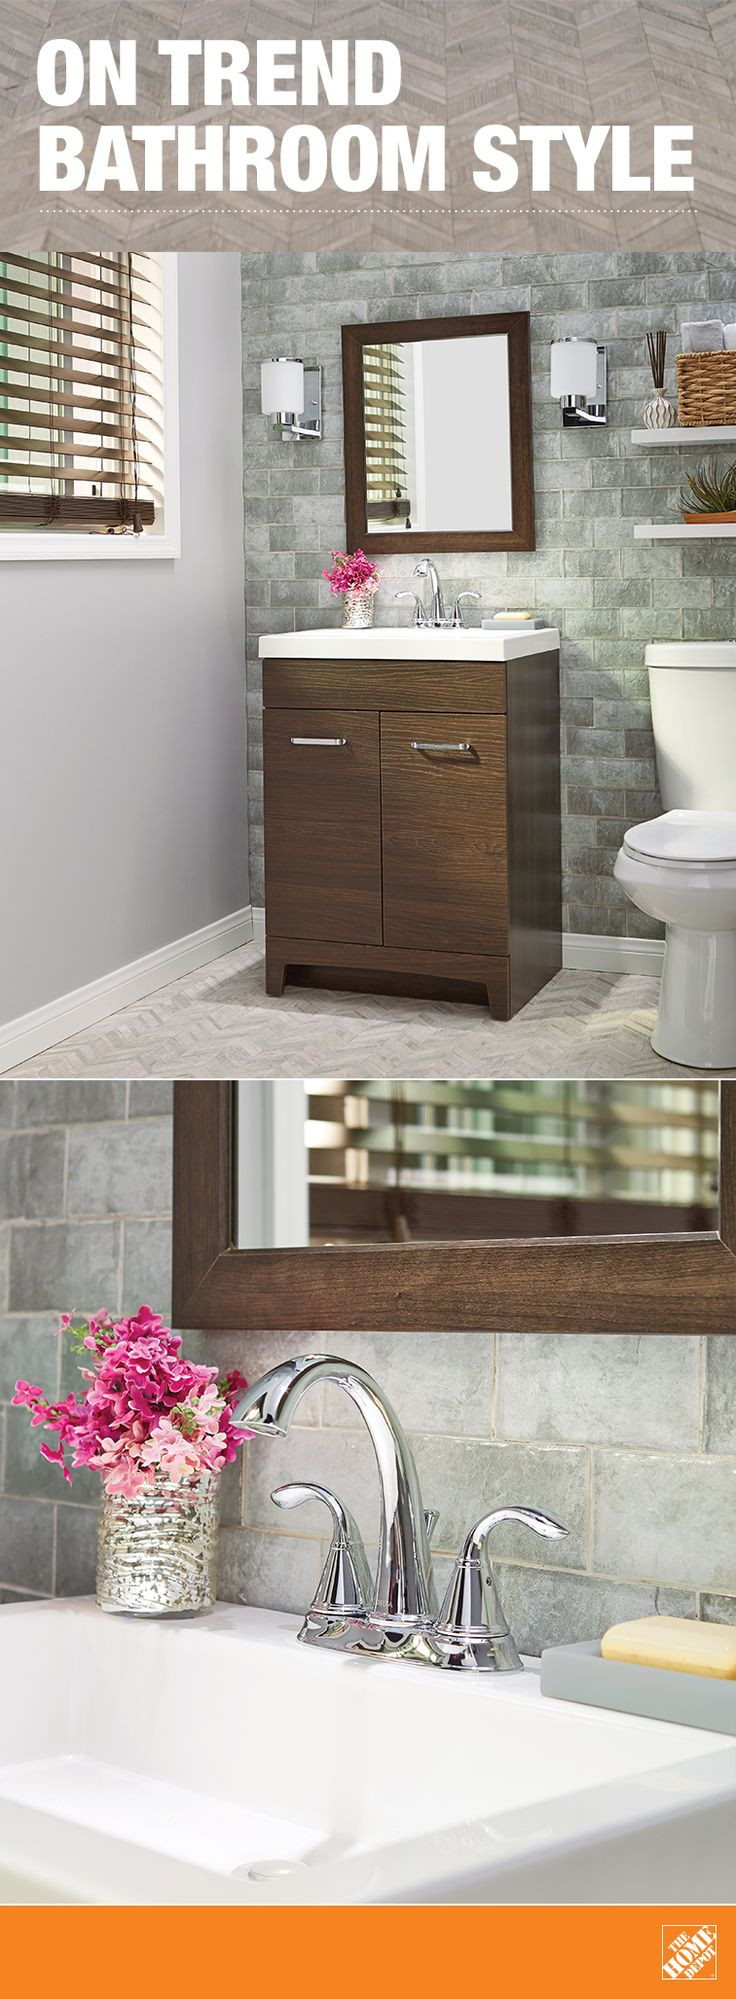 Home Depot Bathroom Remodel Ideas
 376 best images about Bathroom Design Ideas on Pinterest